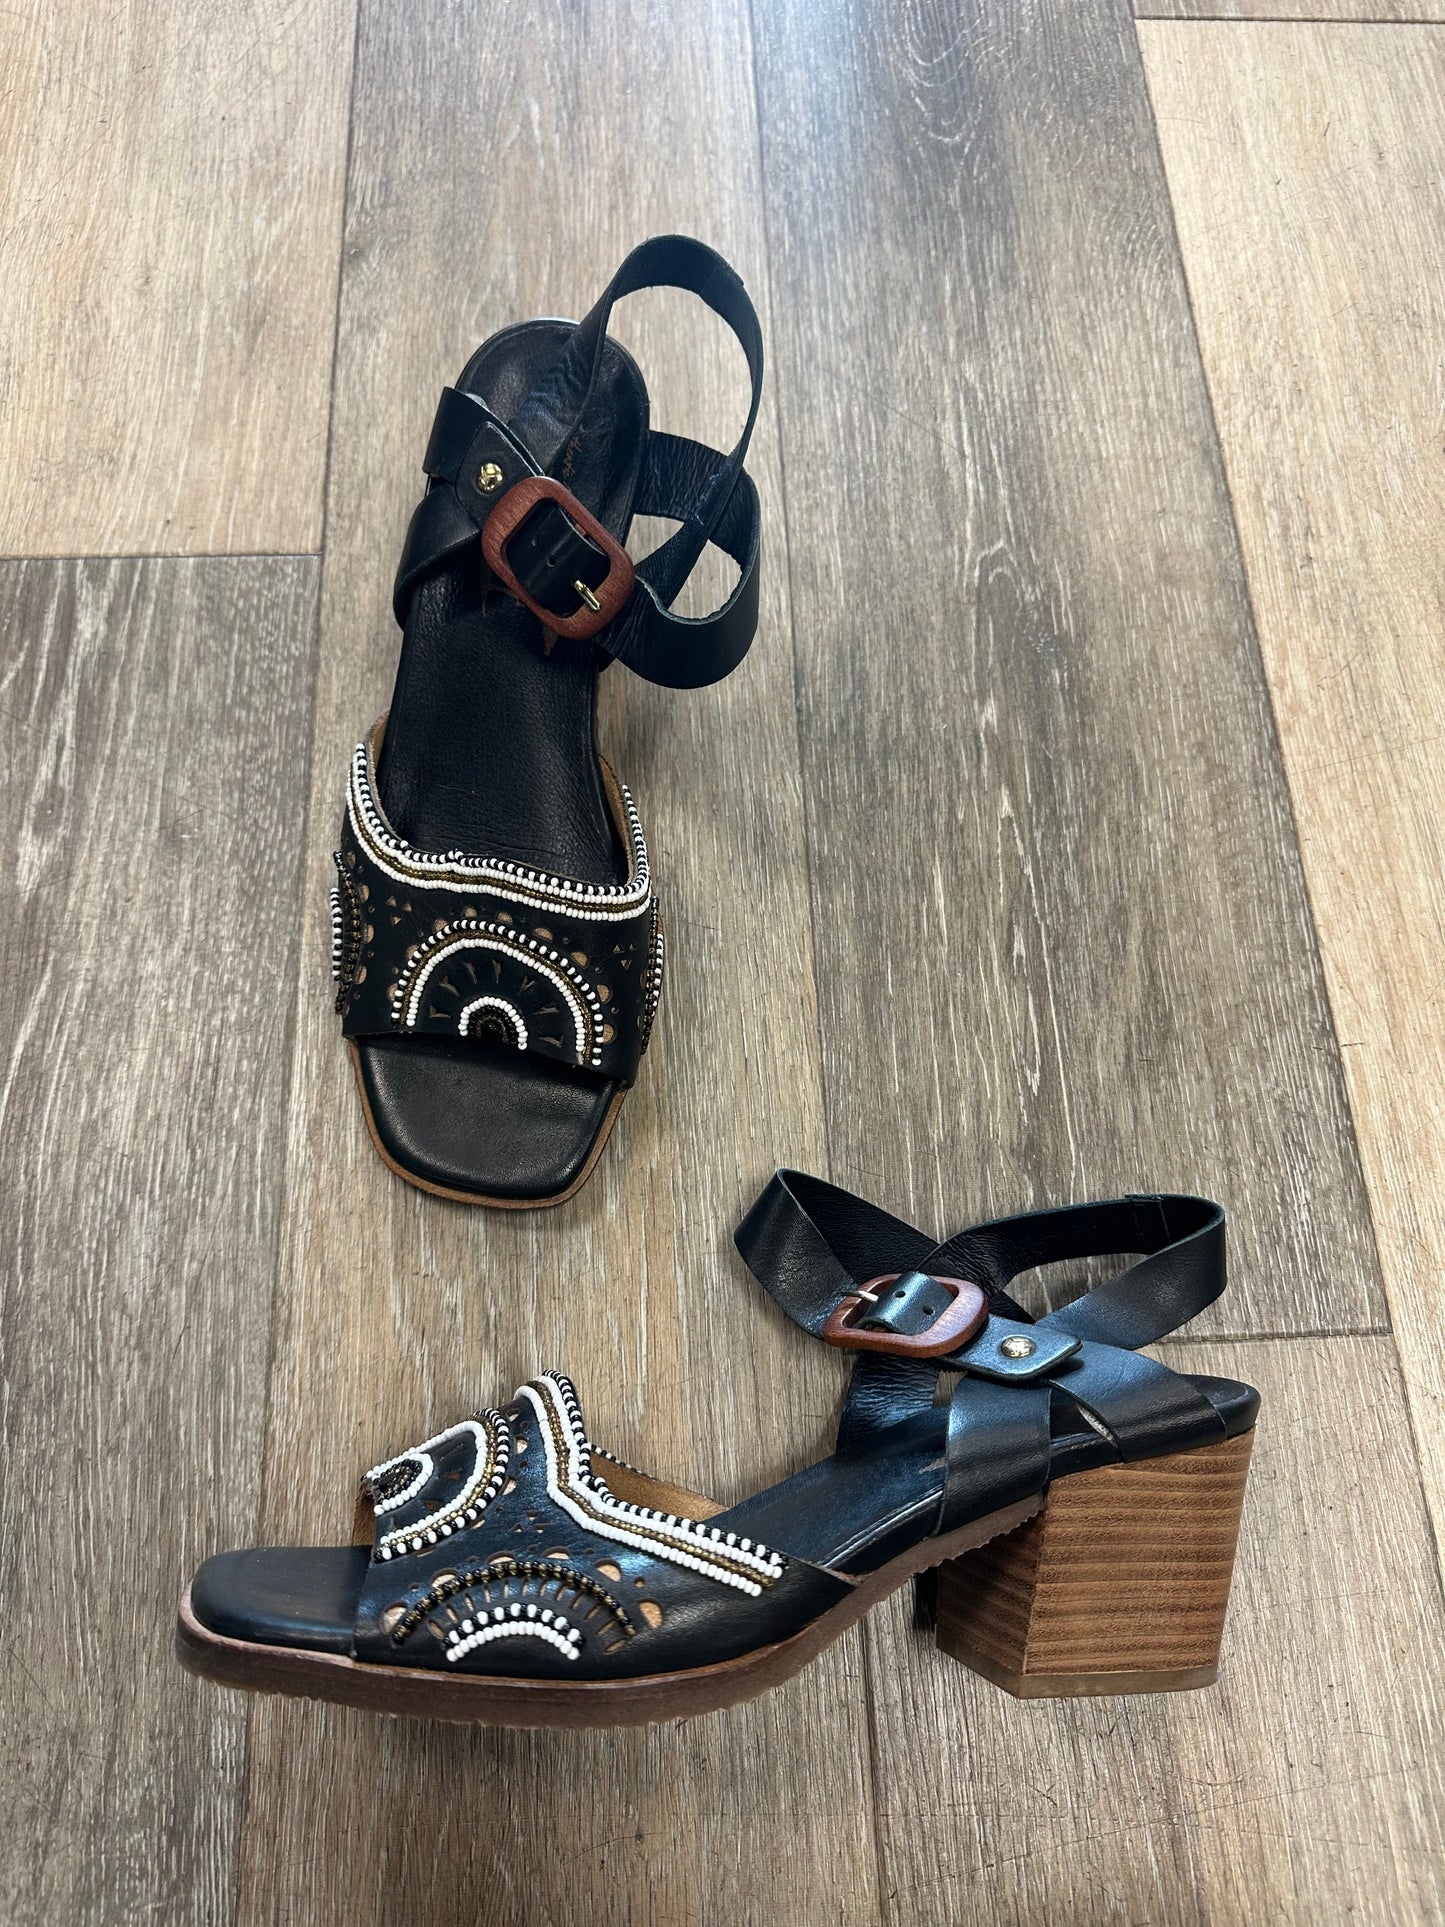 Black Sandals Heels Block Pikolinos, Size 8.5